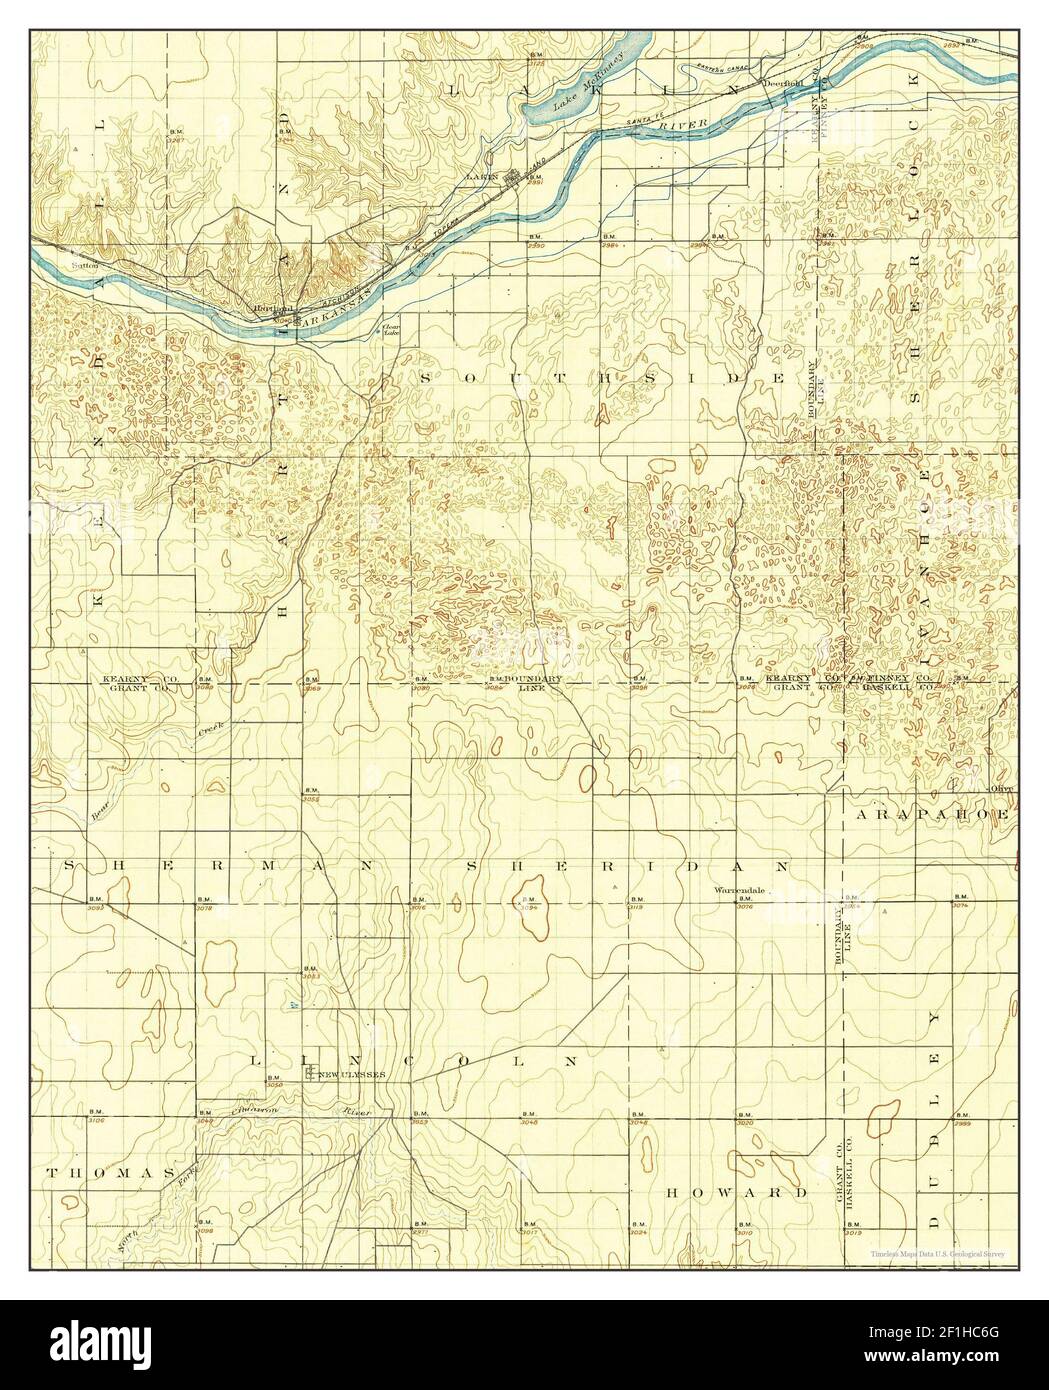 Lakin, Kansas, map 1900, 1:125000, United States of America by Timeless Maps, data U.S. Geological Survey Stock Photo